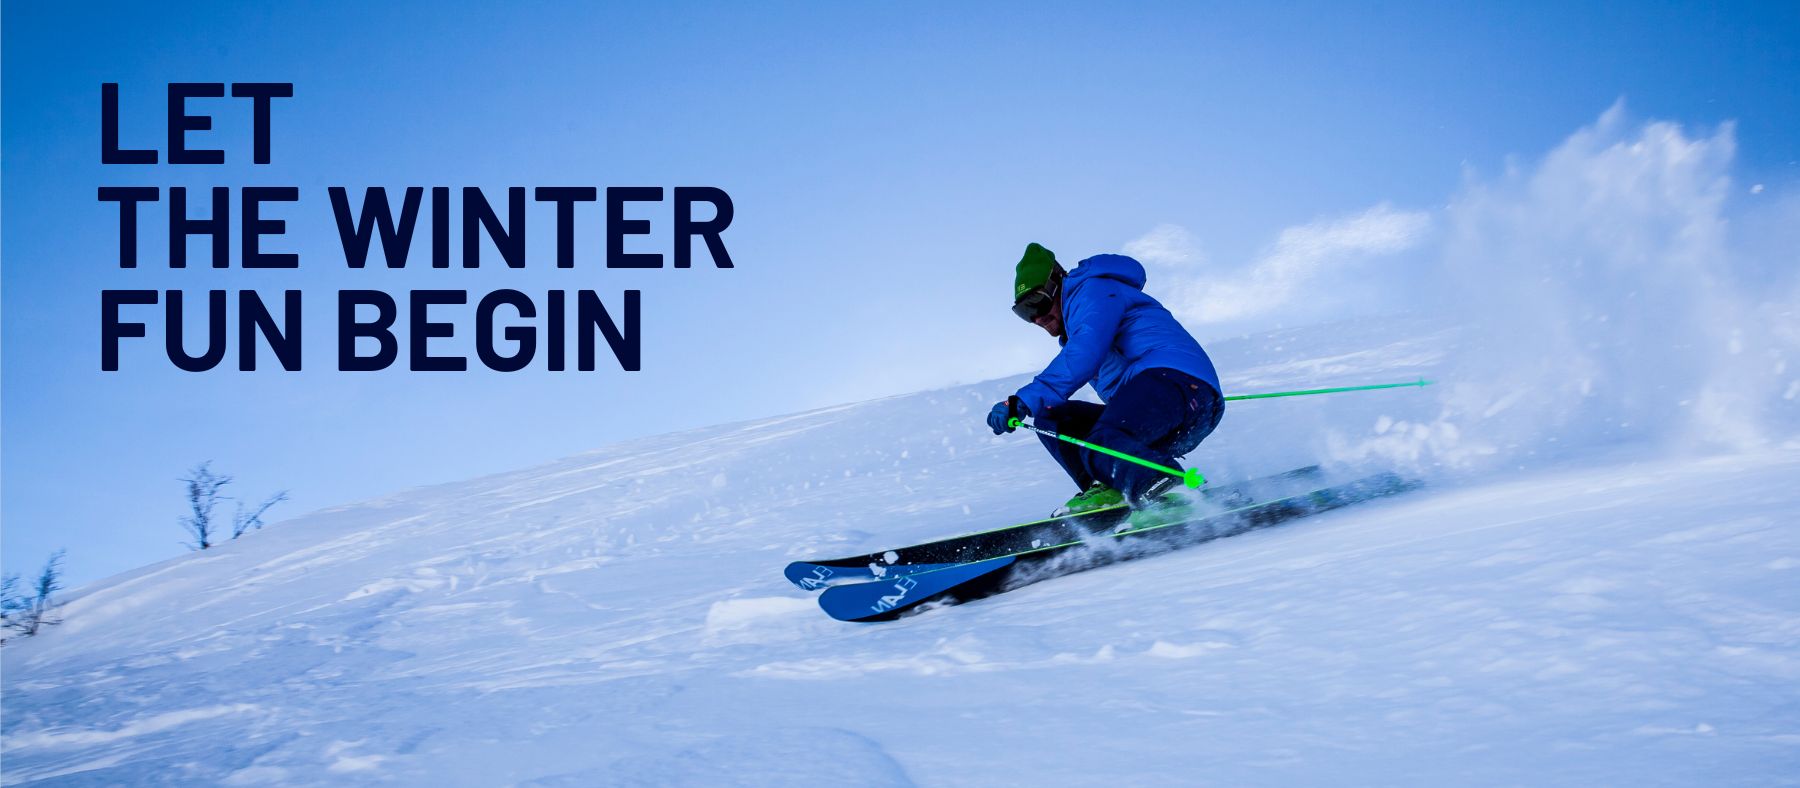 SOREL Skiing & Winter Clothes, Shoes & Gear